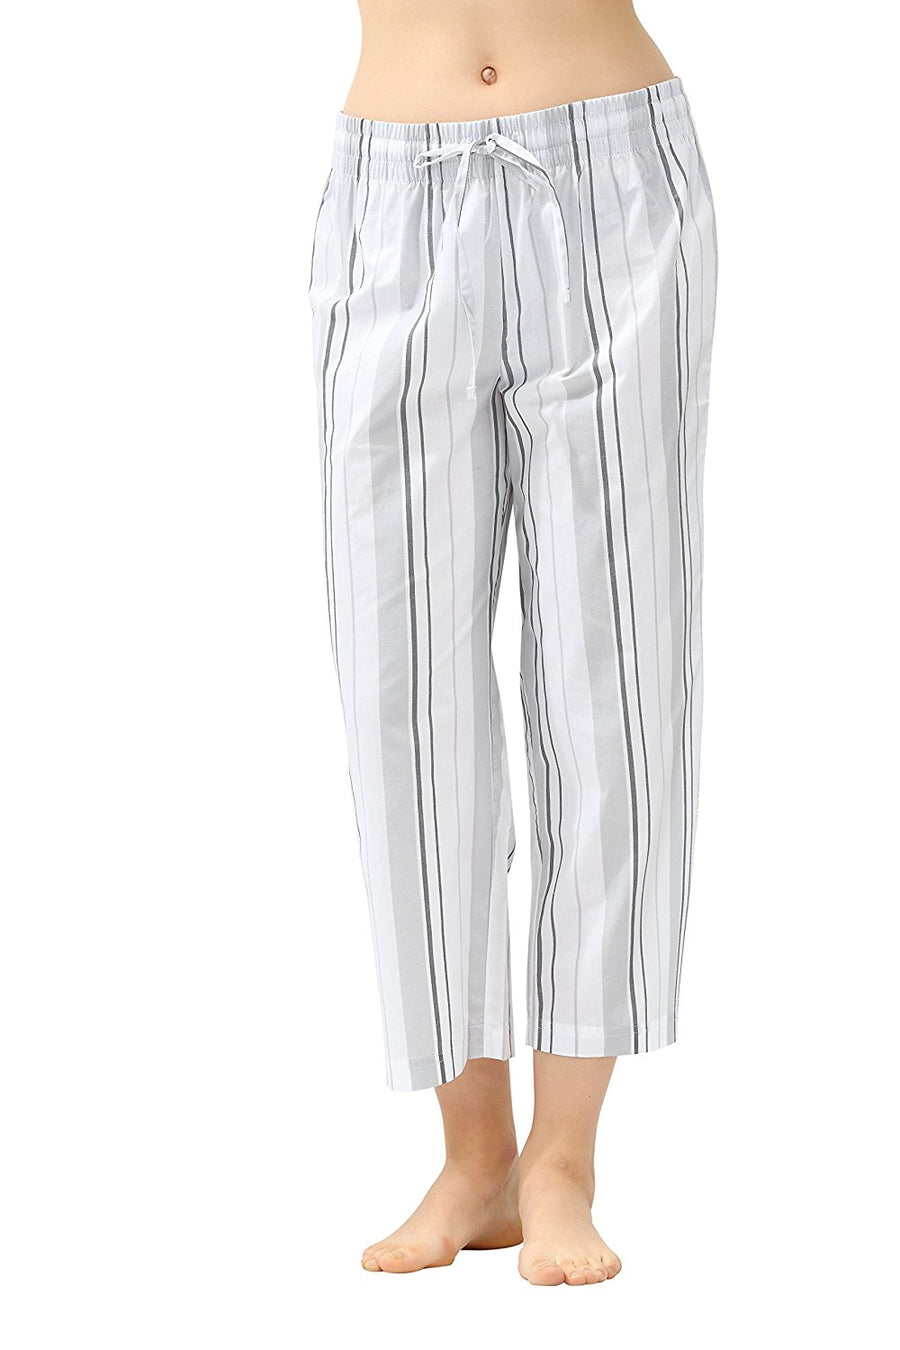 Dreams & Co. Women's Plus Size Knit Sleep Capri Pajamas - Walmart.com